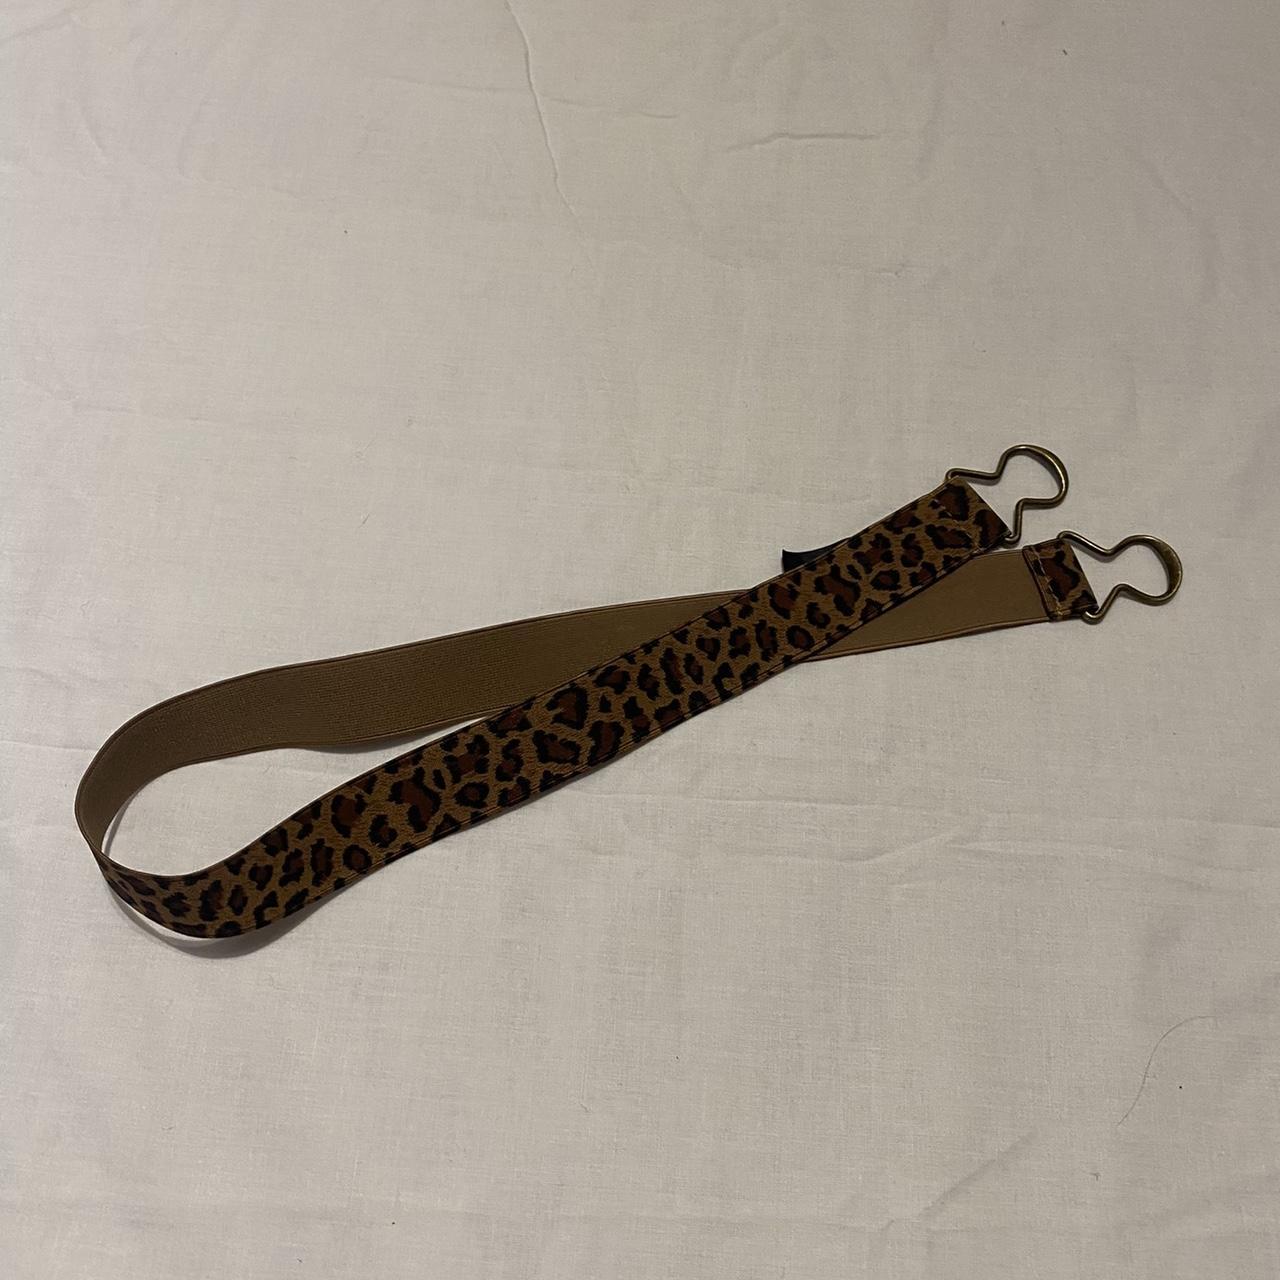 Leopard print belt from Urban Outfitters - Urban... - Depop